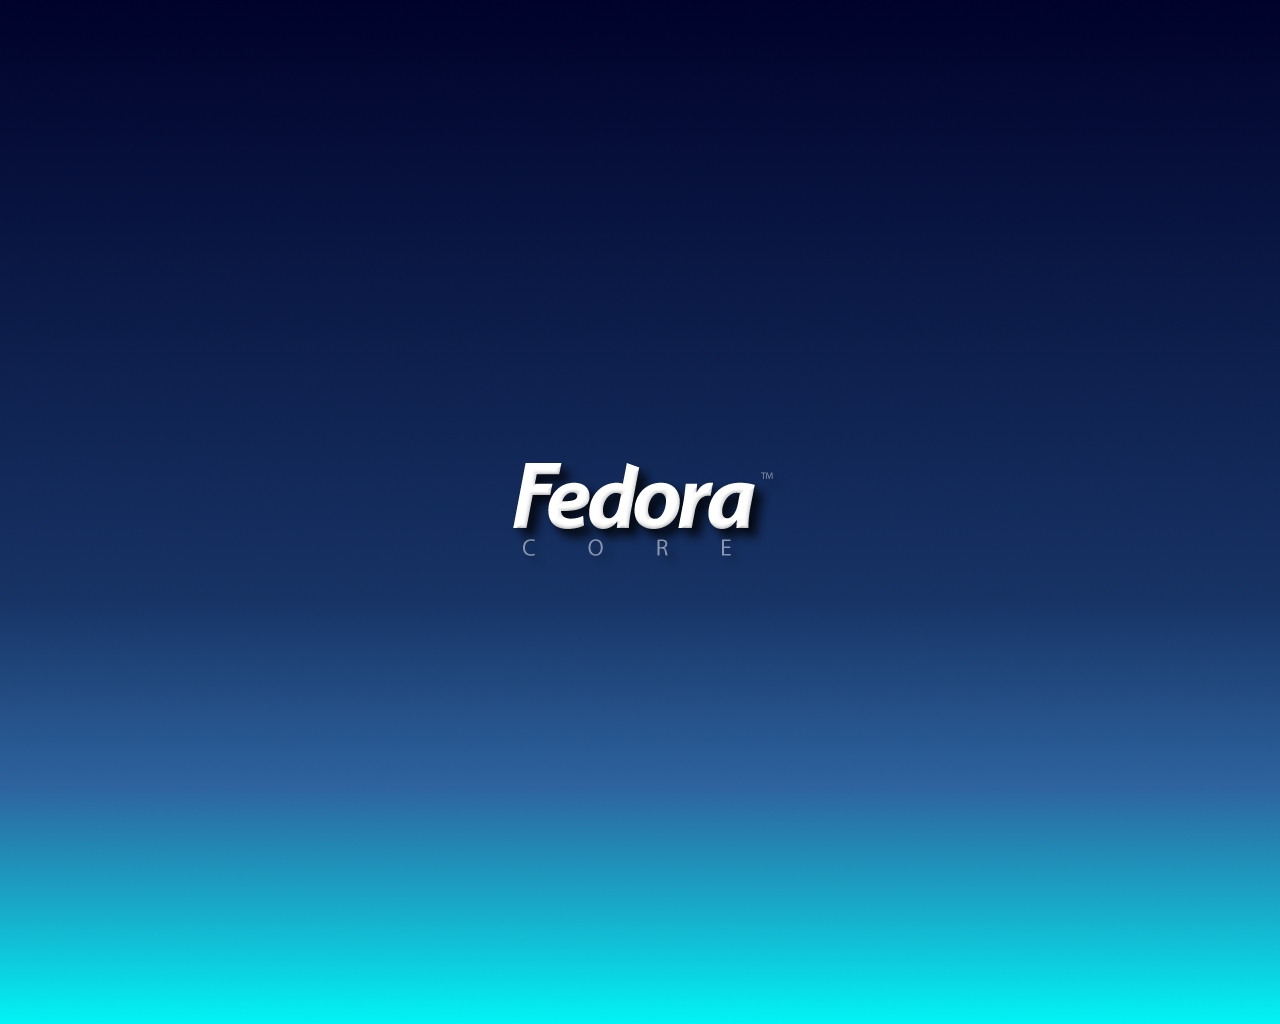 Balanced Fedora Linux Font Image Wallpaper HD Widescreen For Pc